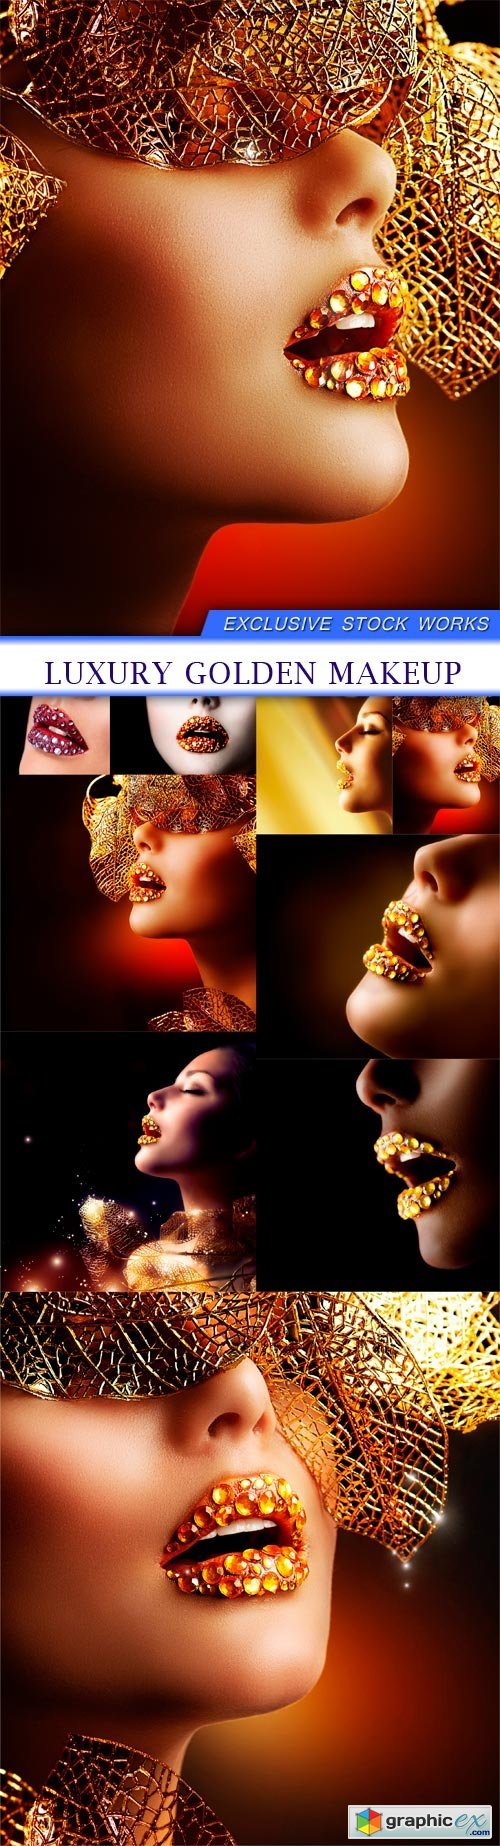 Luxury Golden Makeup 9X JPEG